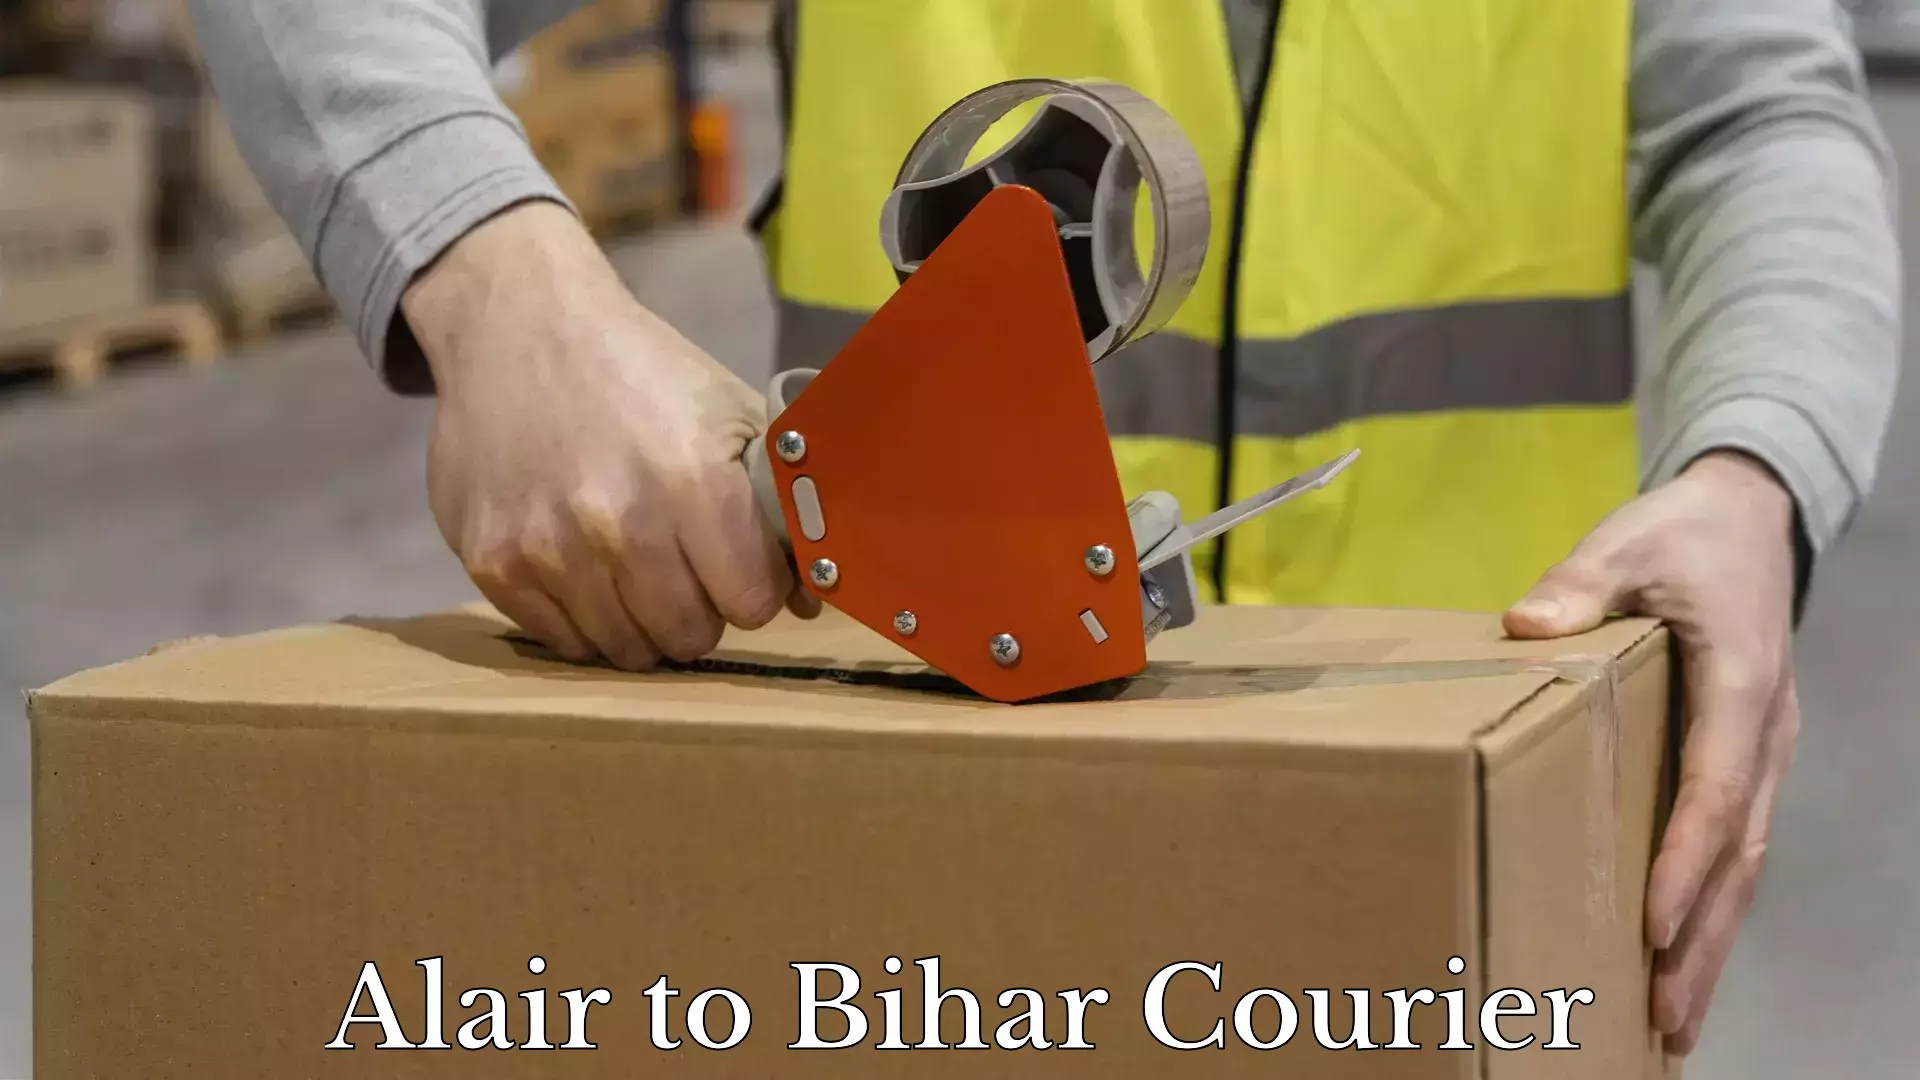 Professional movers Alair to Bihar